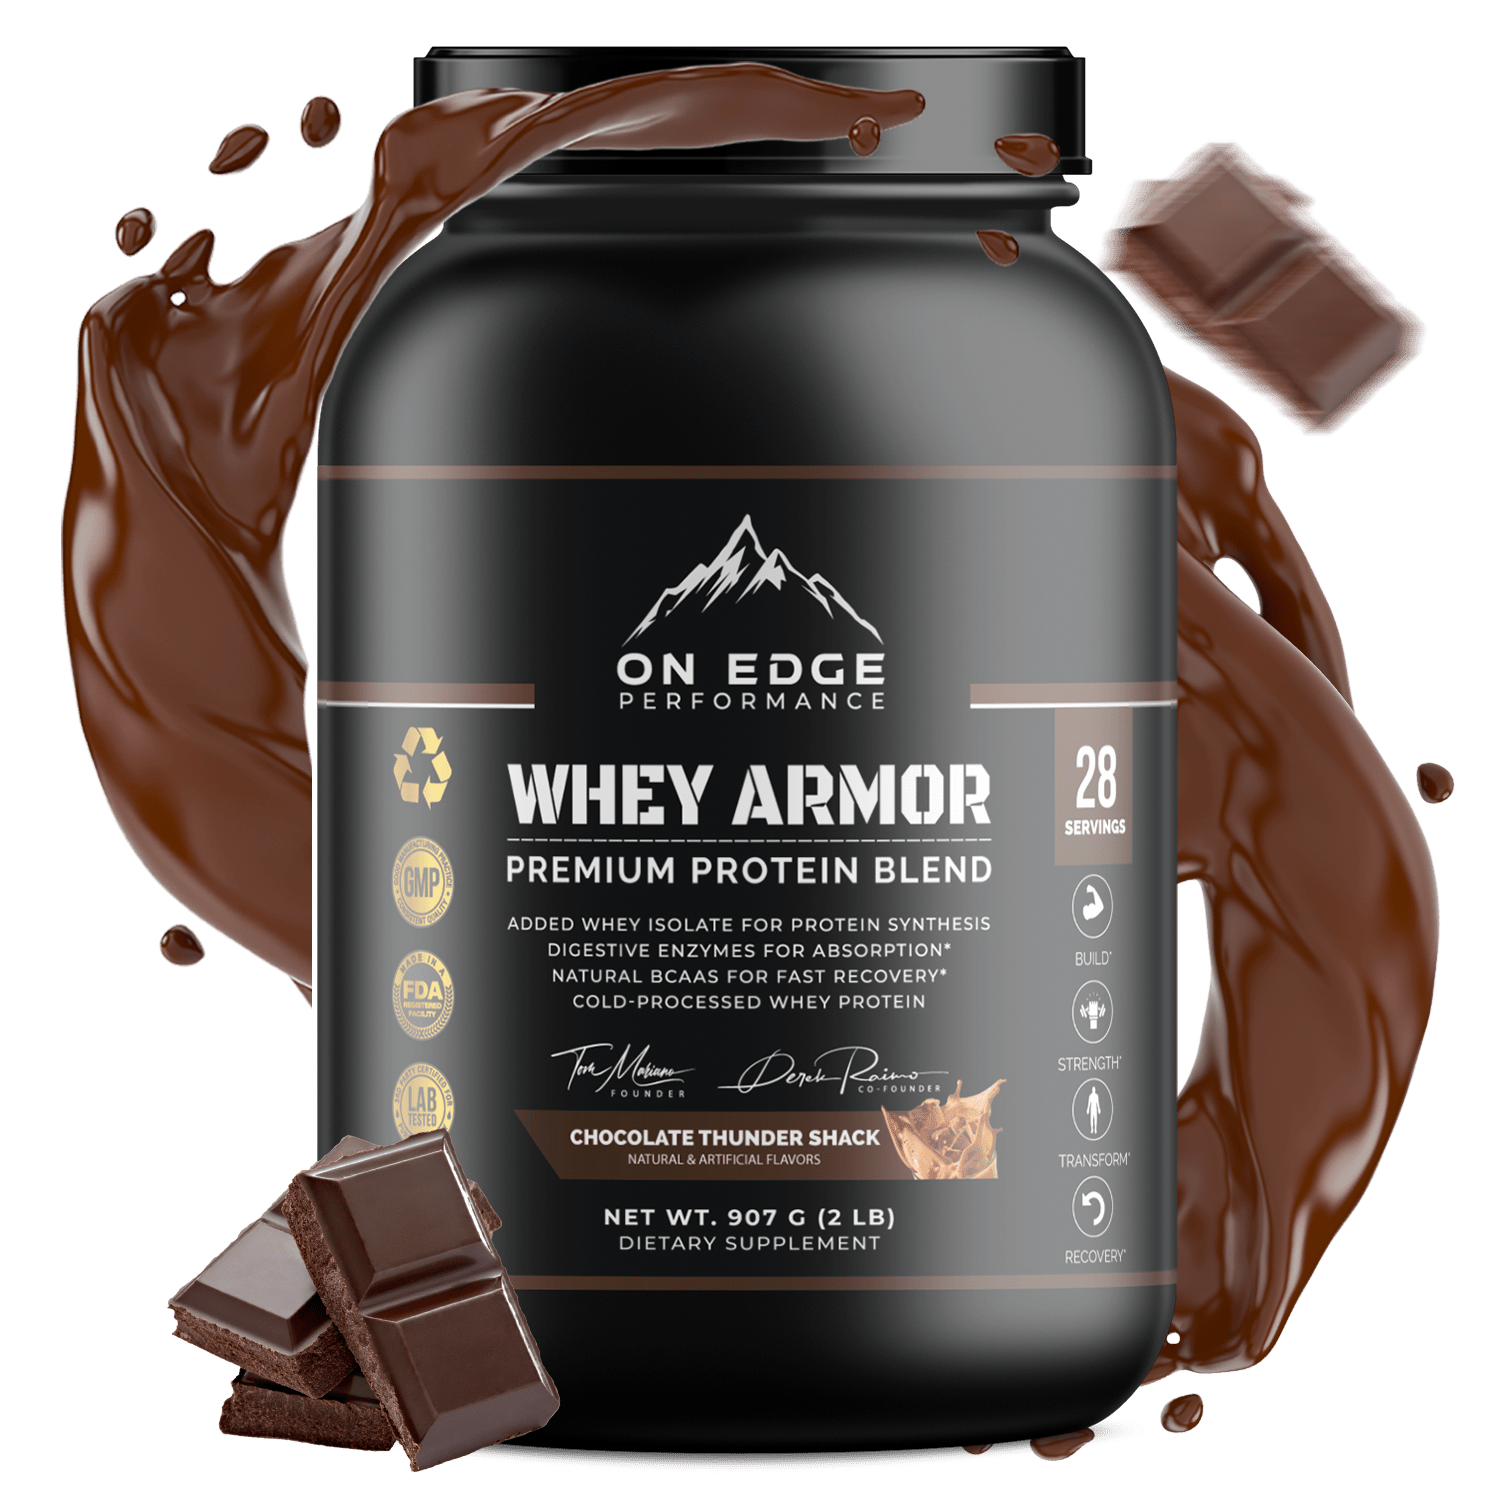 Whey Armor Chocolate Thunder Shake